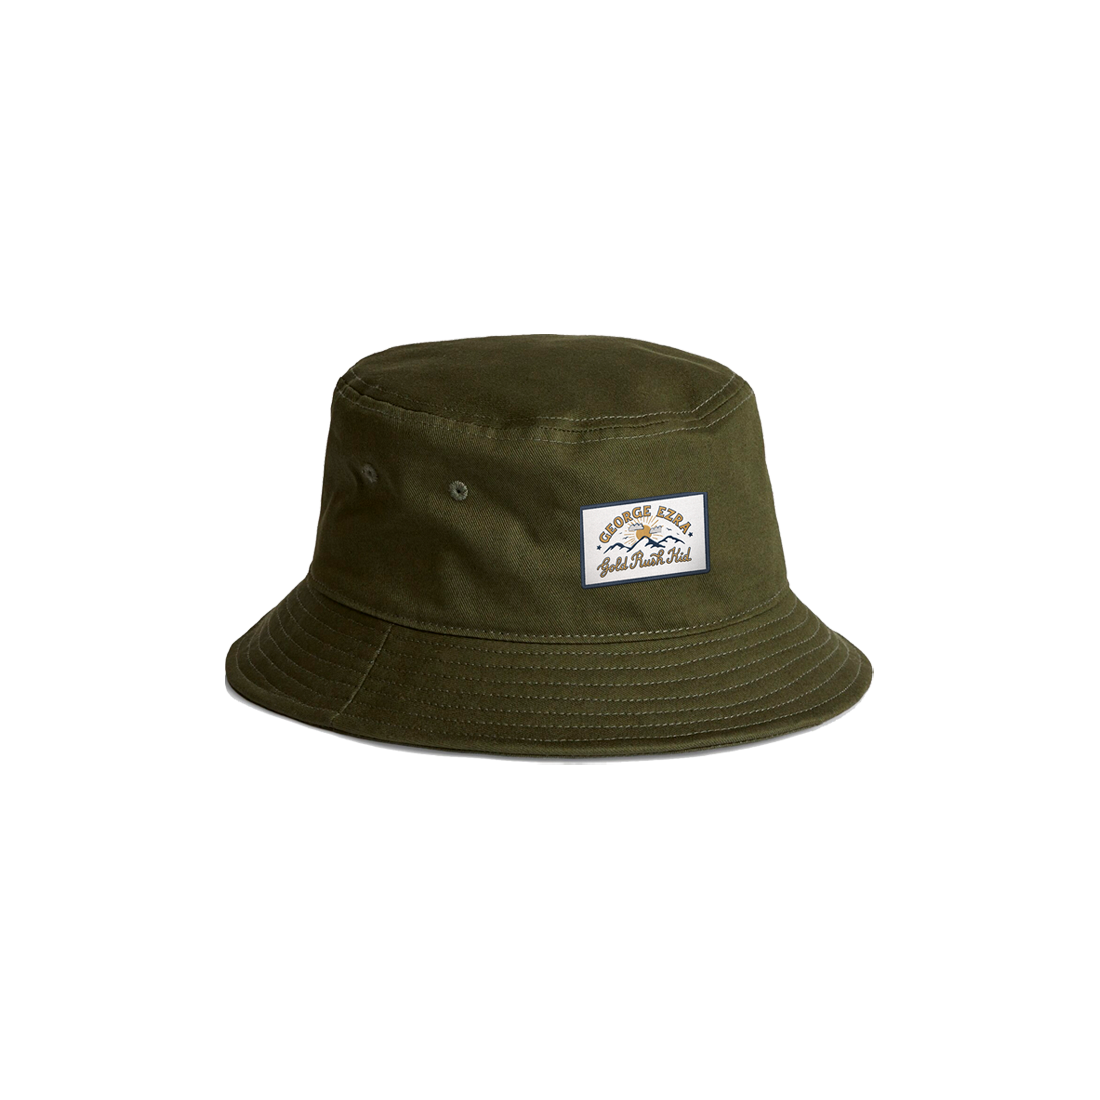 Gold Rush Kid Mountains Bucket Hat